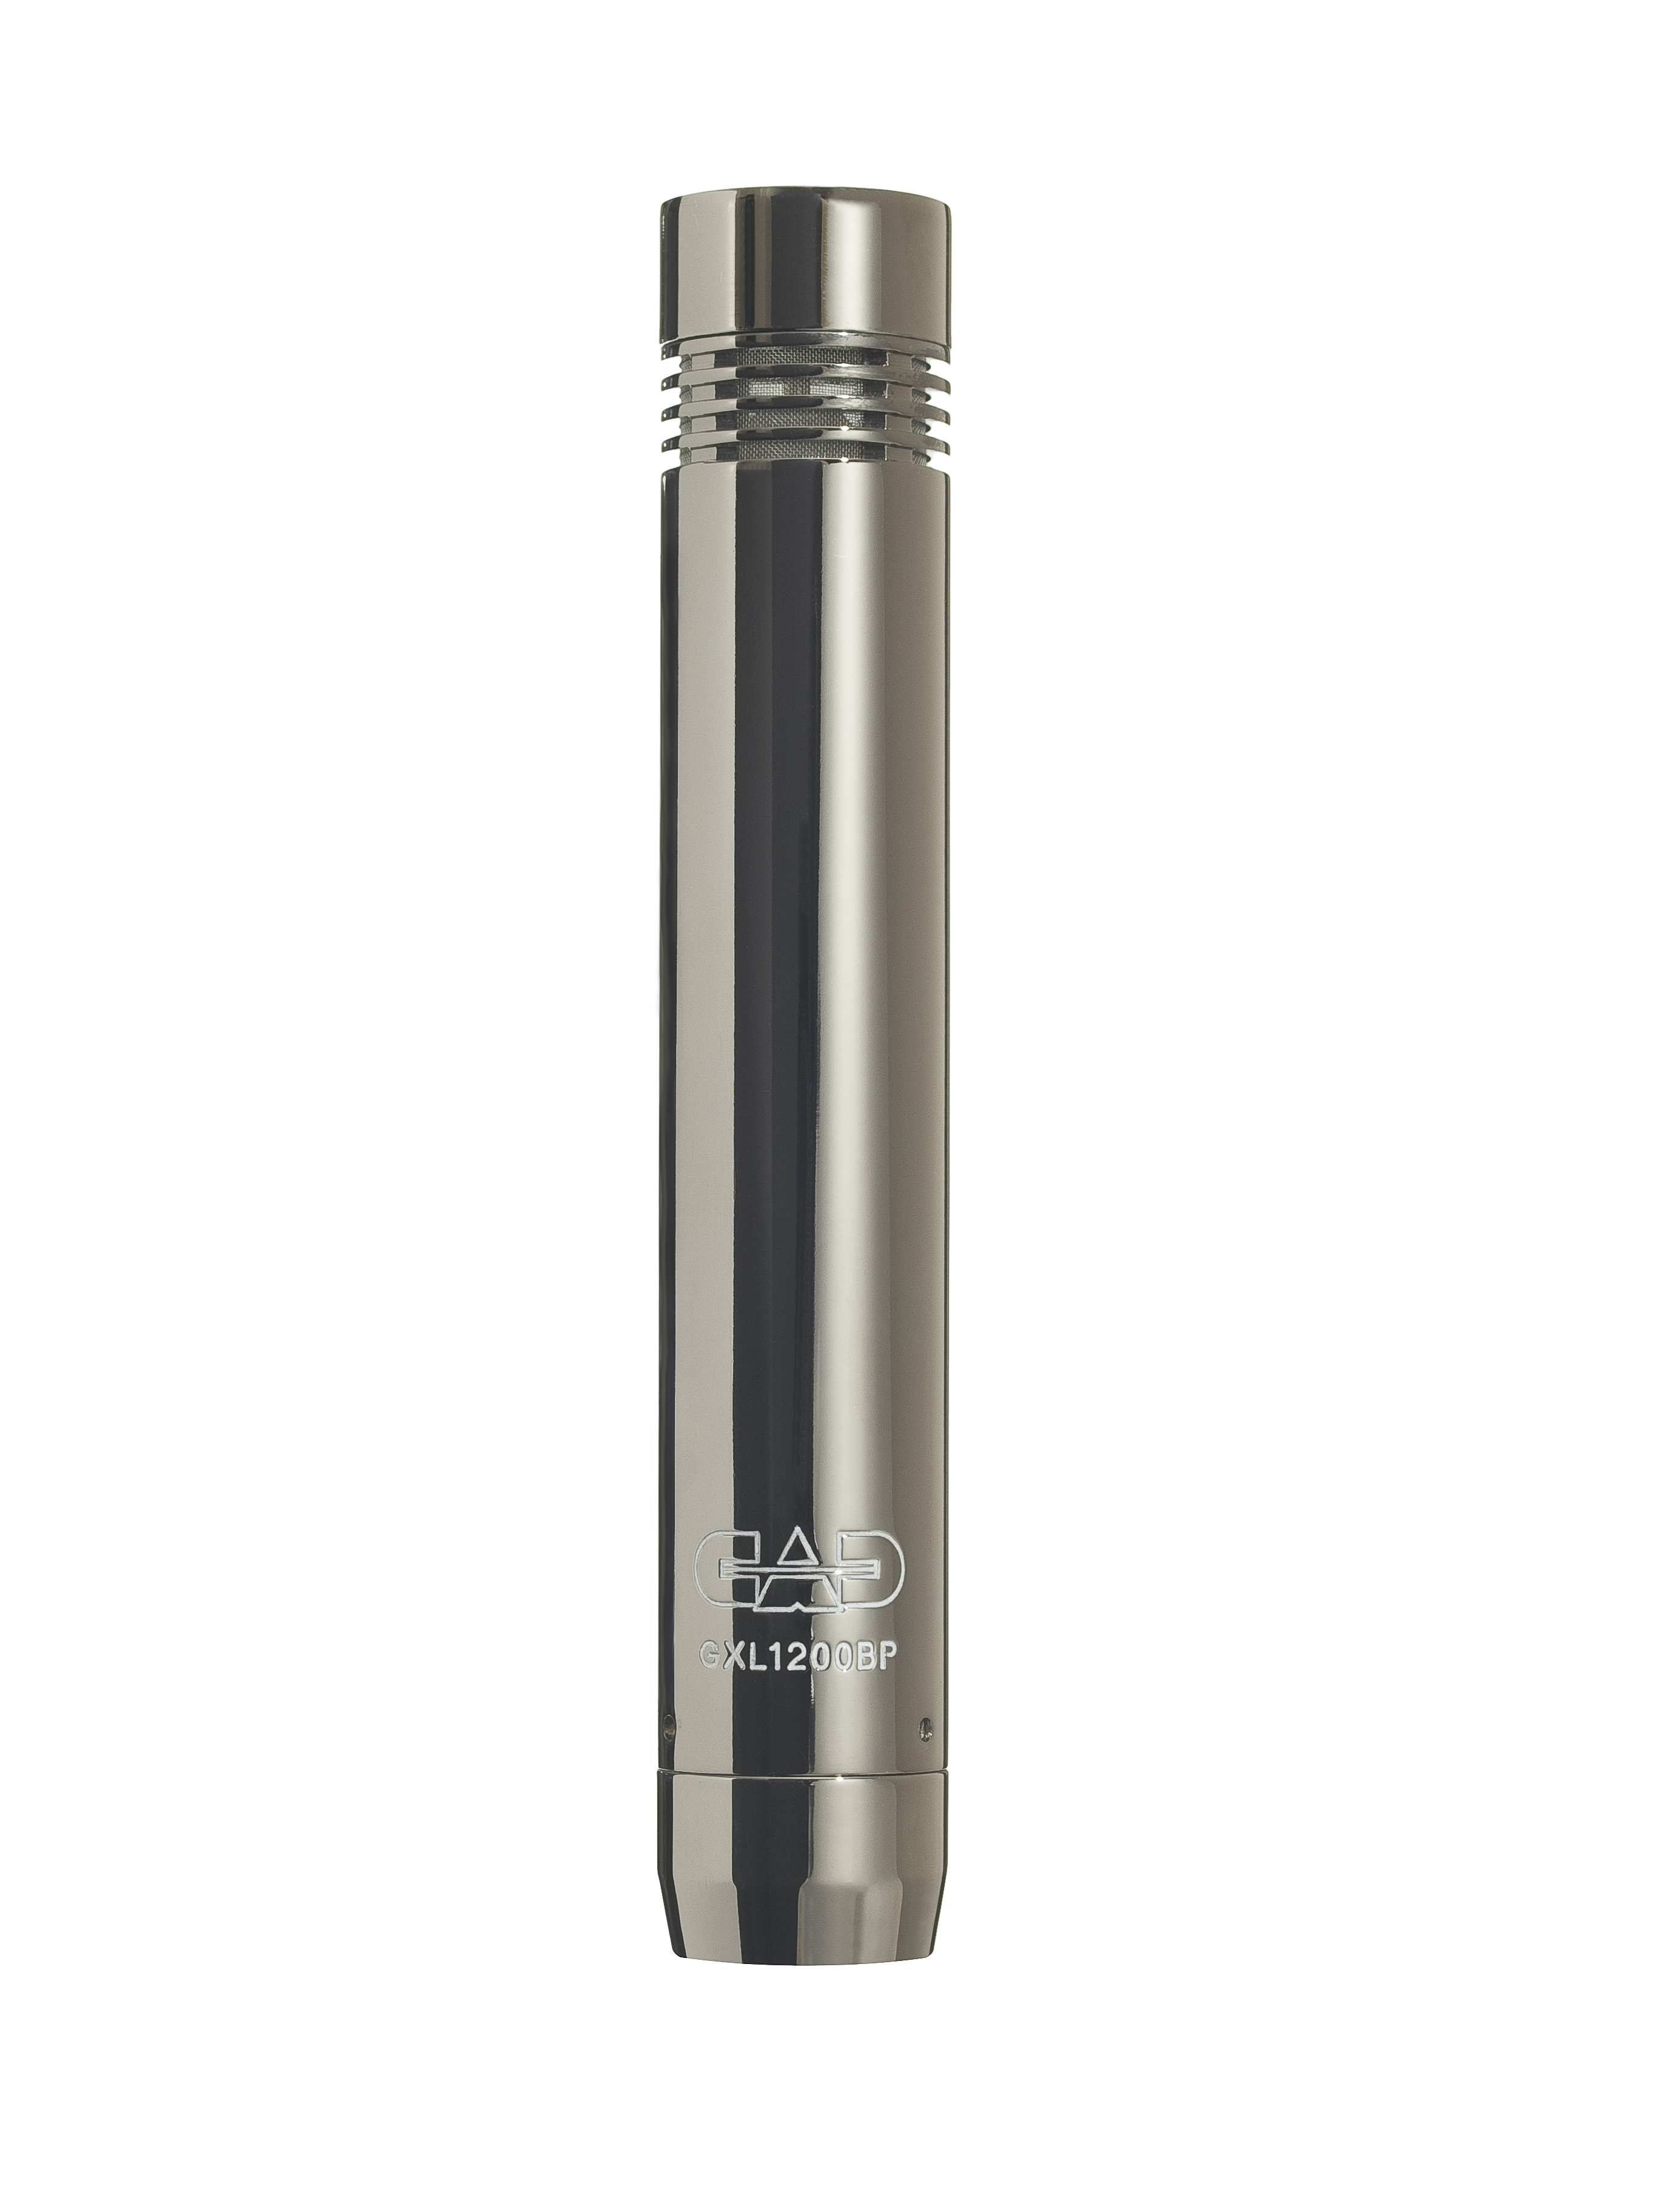 CAD CAD GXL1200BP Small Diaphragm Cardioid Condenser Microphone